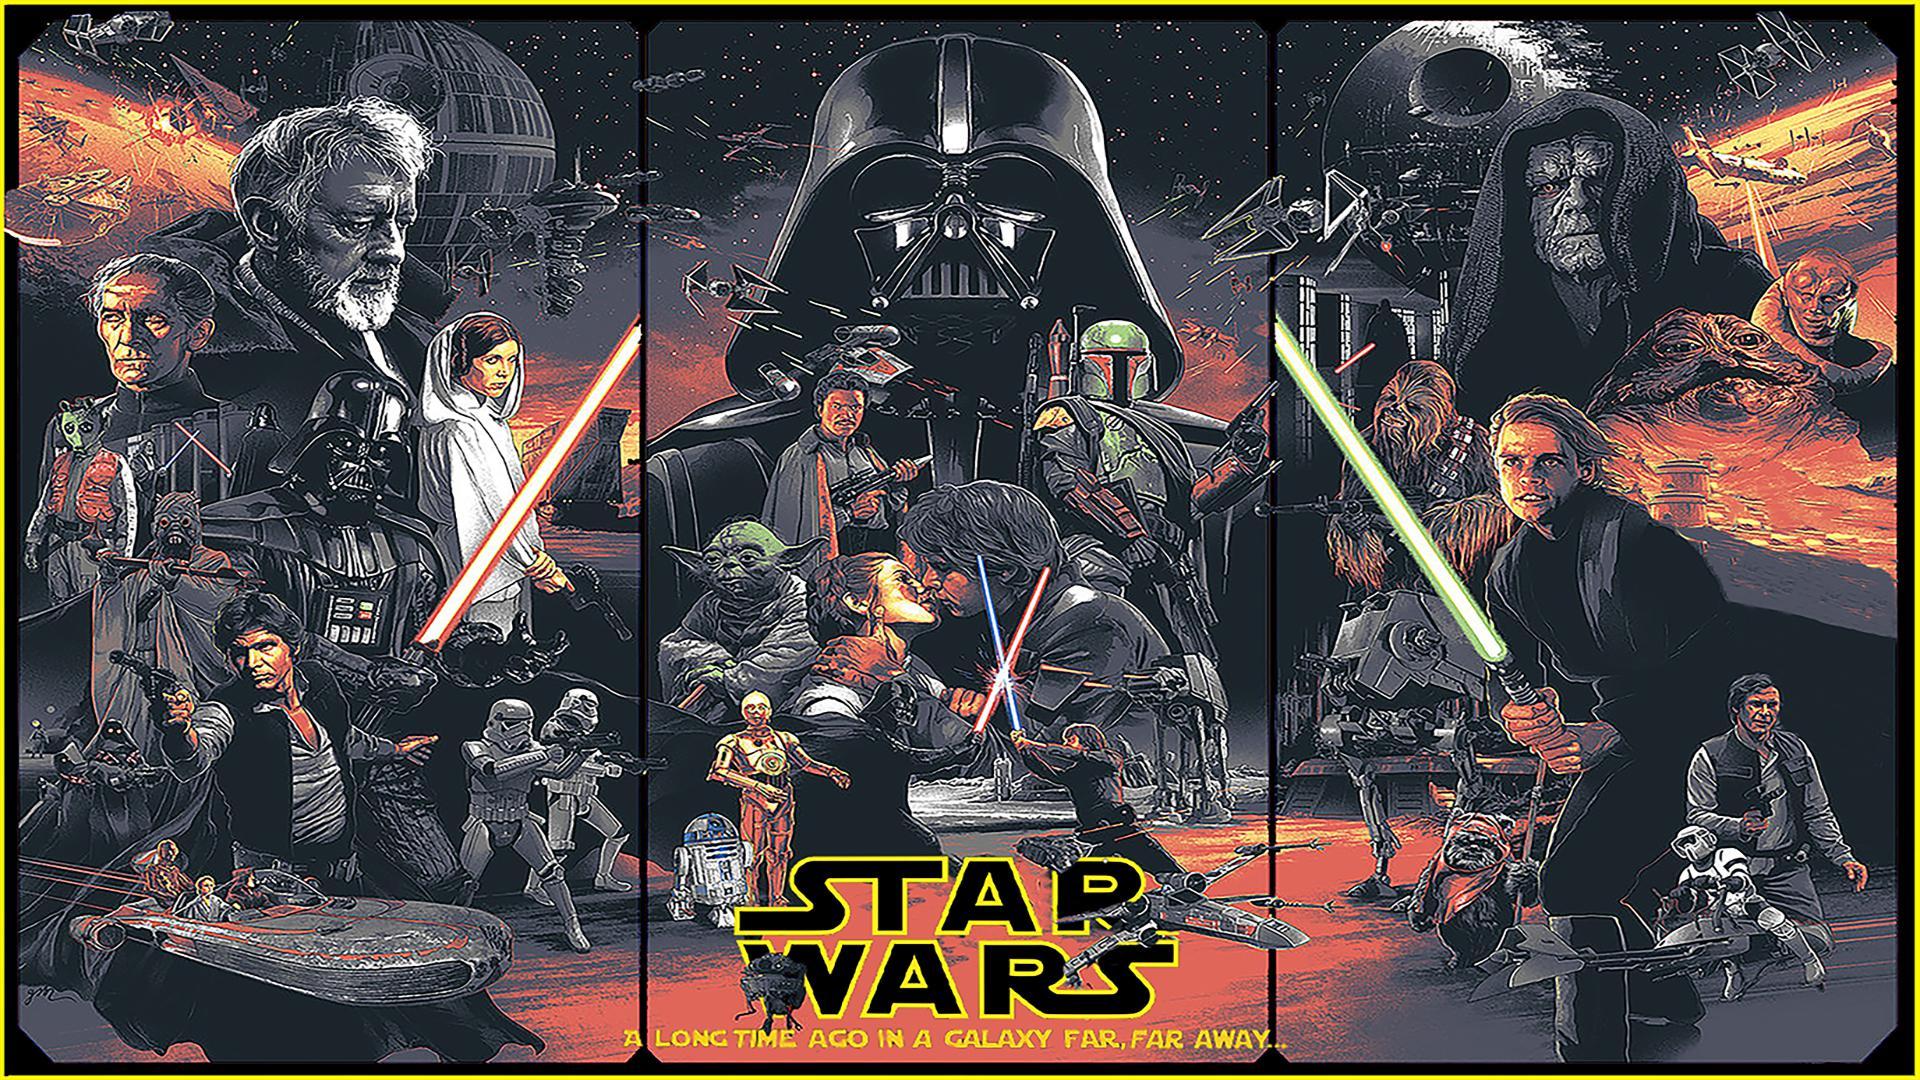 Star Wars Original Trilogy Wallpapers - Top Free Star Wars Original